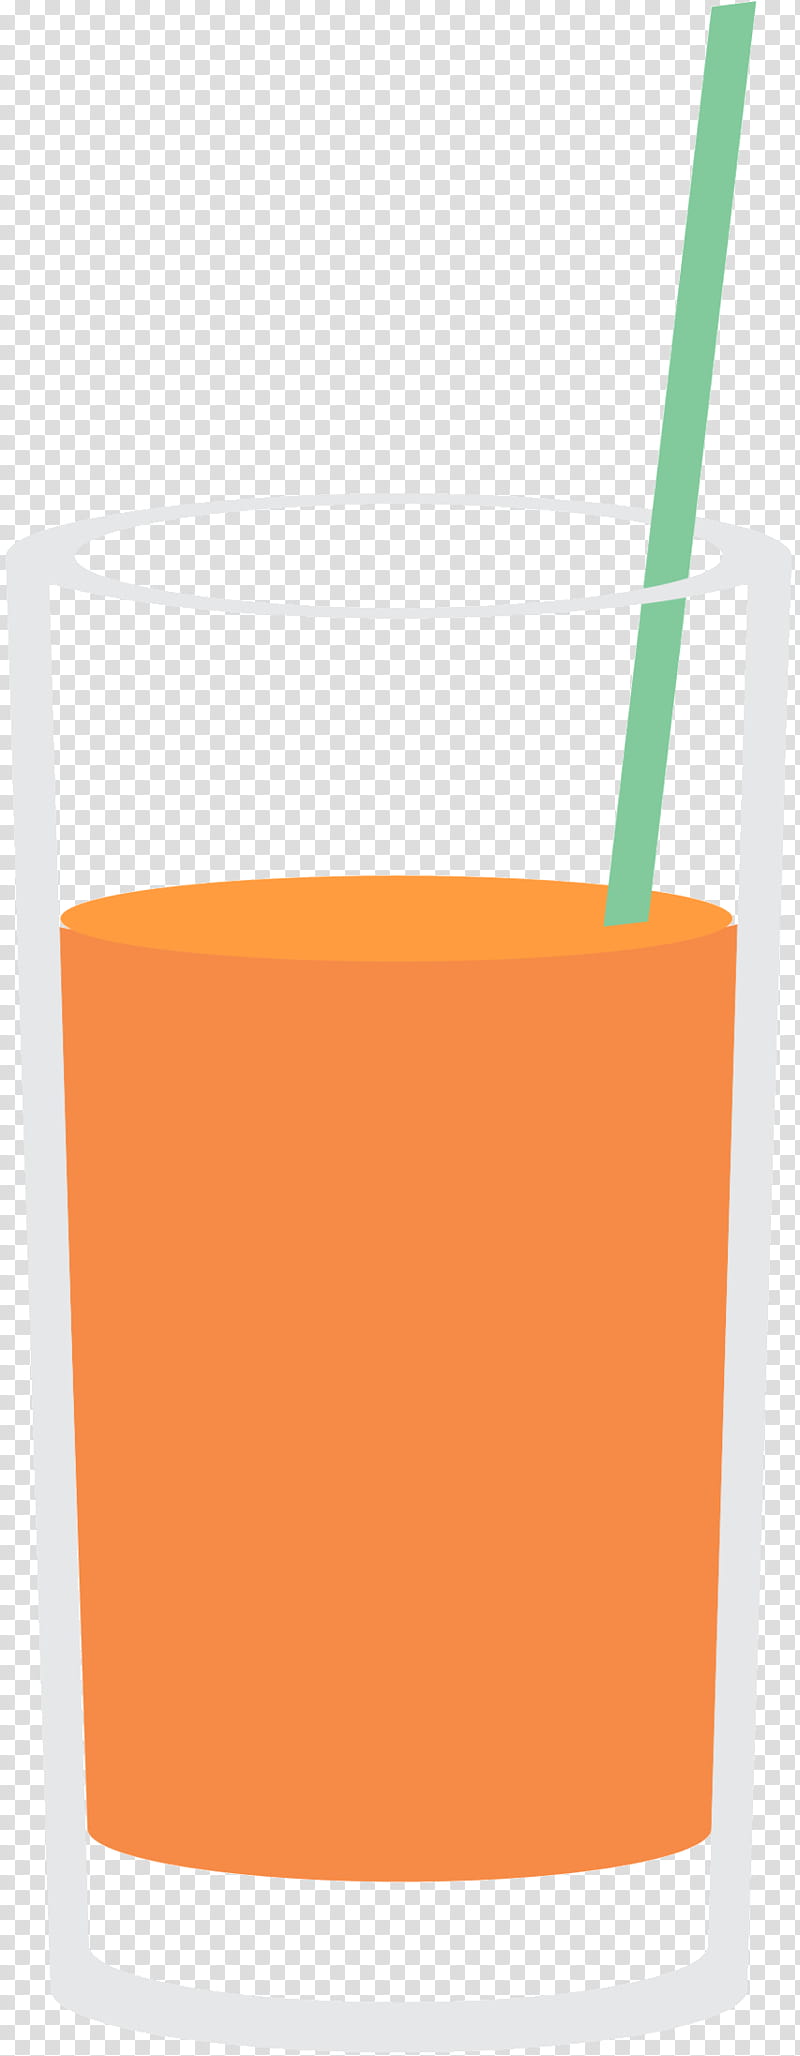 Juice, Orange Juice, Orange Drink, Cup, Pint Glass, Nonalcoholic Beverage, Drinkware, Smoothie transparent background PNG clipart